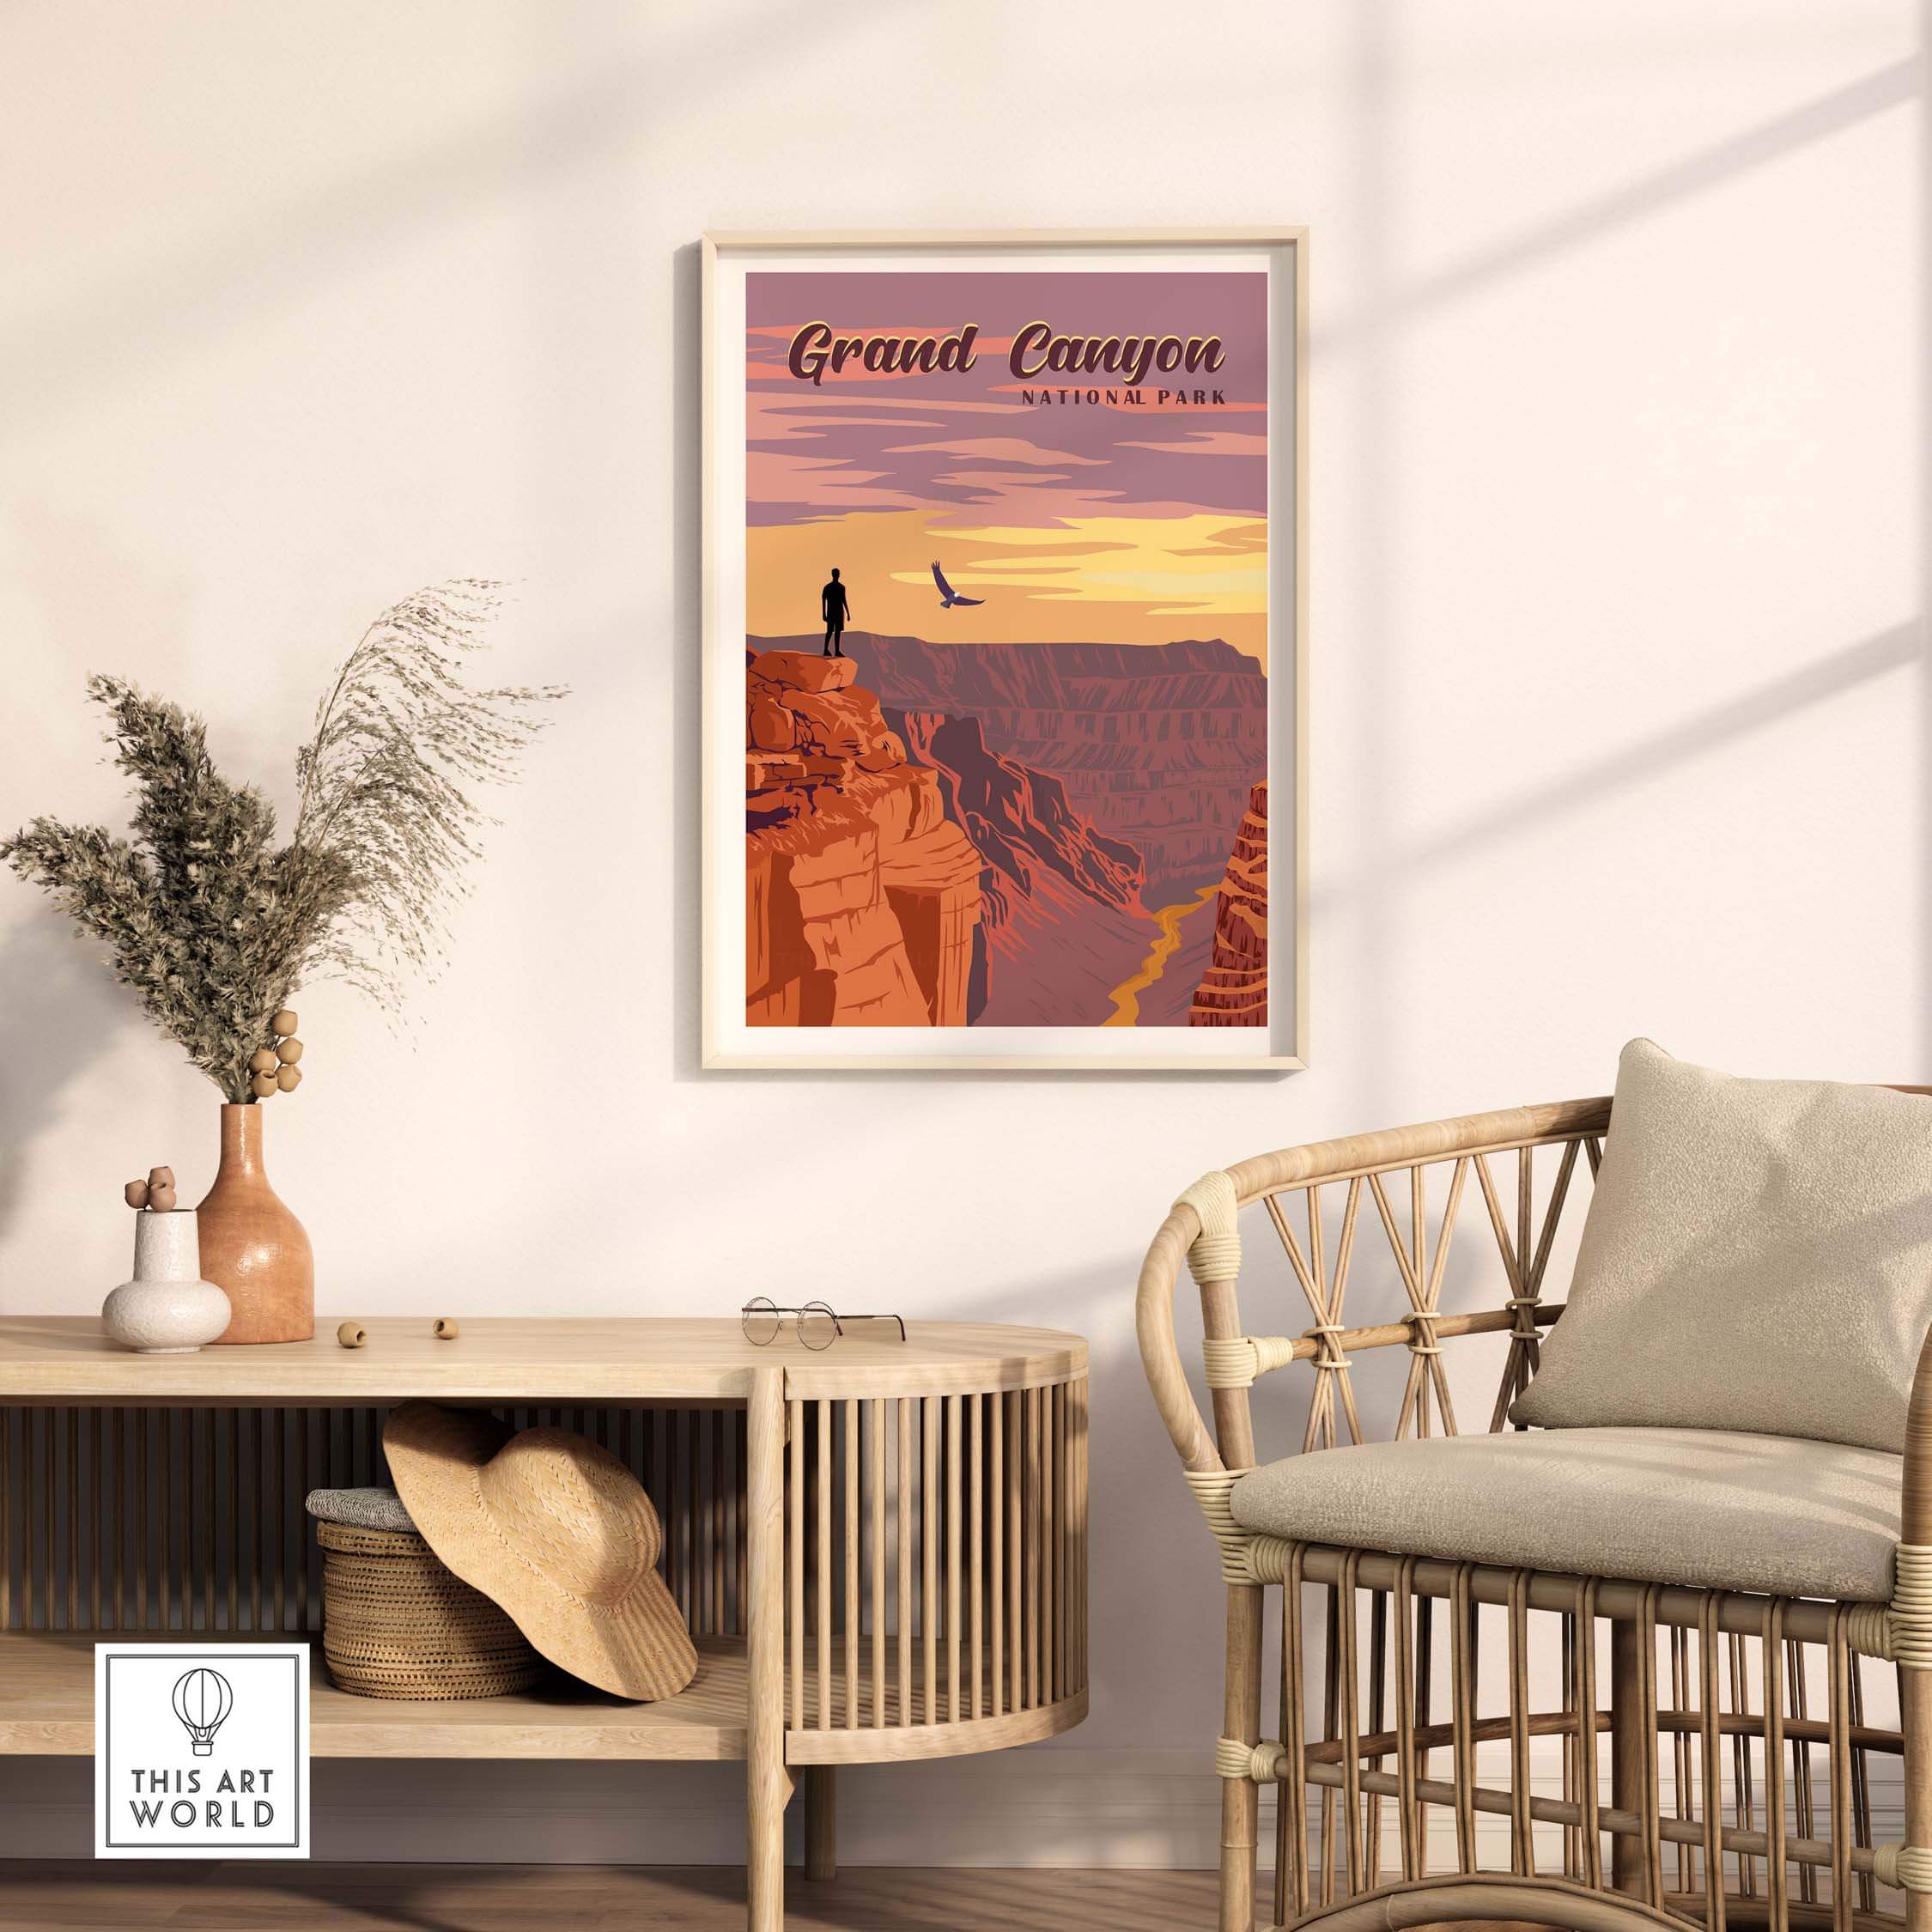 Grand Canyon National Park Print - Wall Art | This Art World